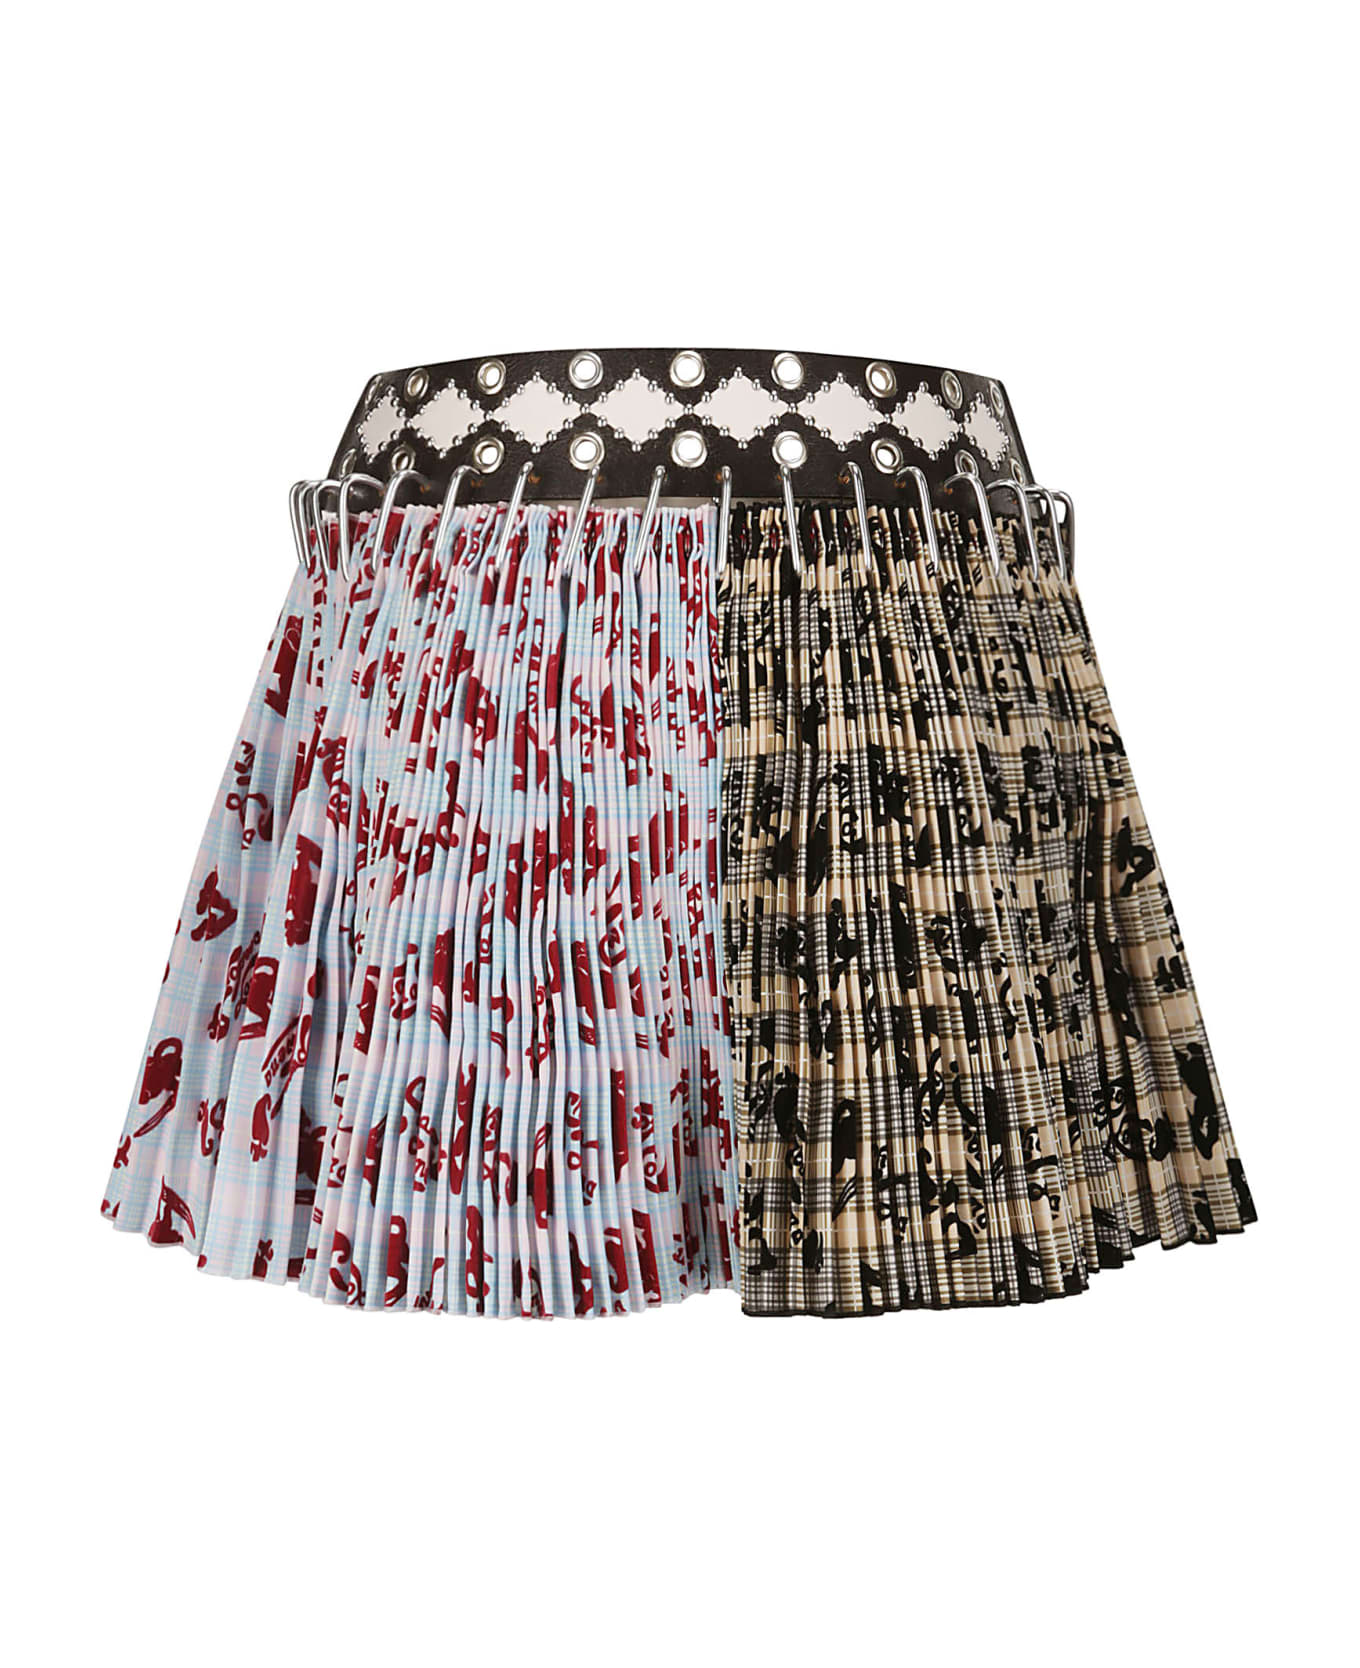 Chopova Lowena Taffeta Mini Carabiner Skirt - BROWN AND PINK